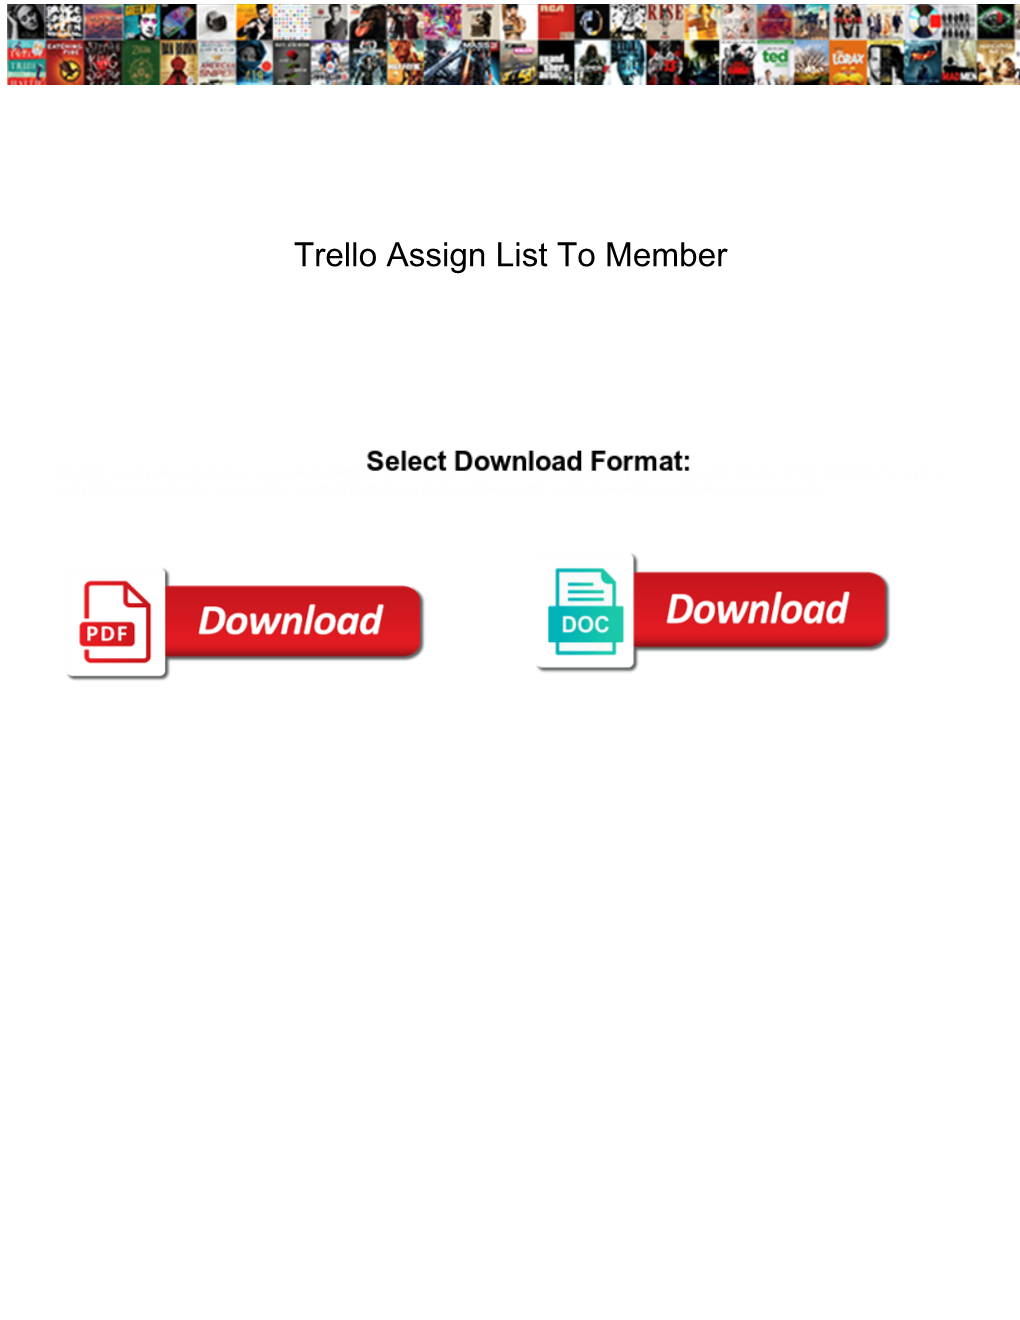 Trello Assign List to Member